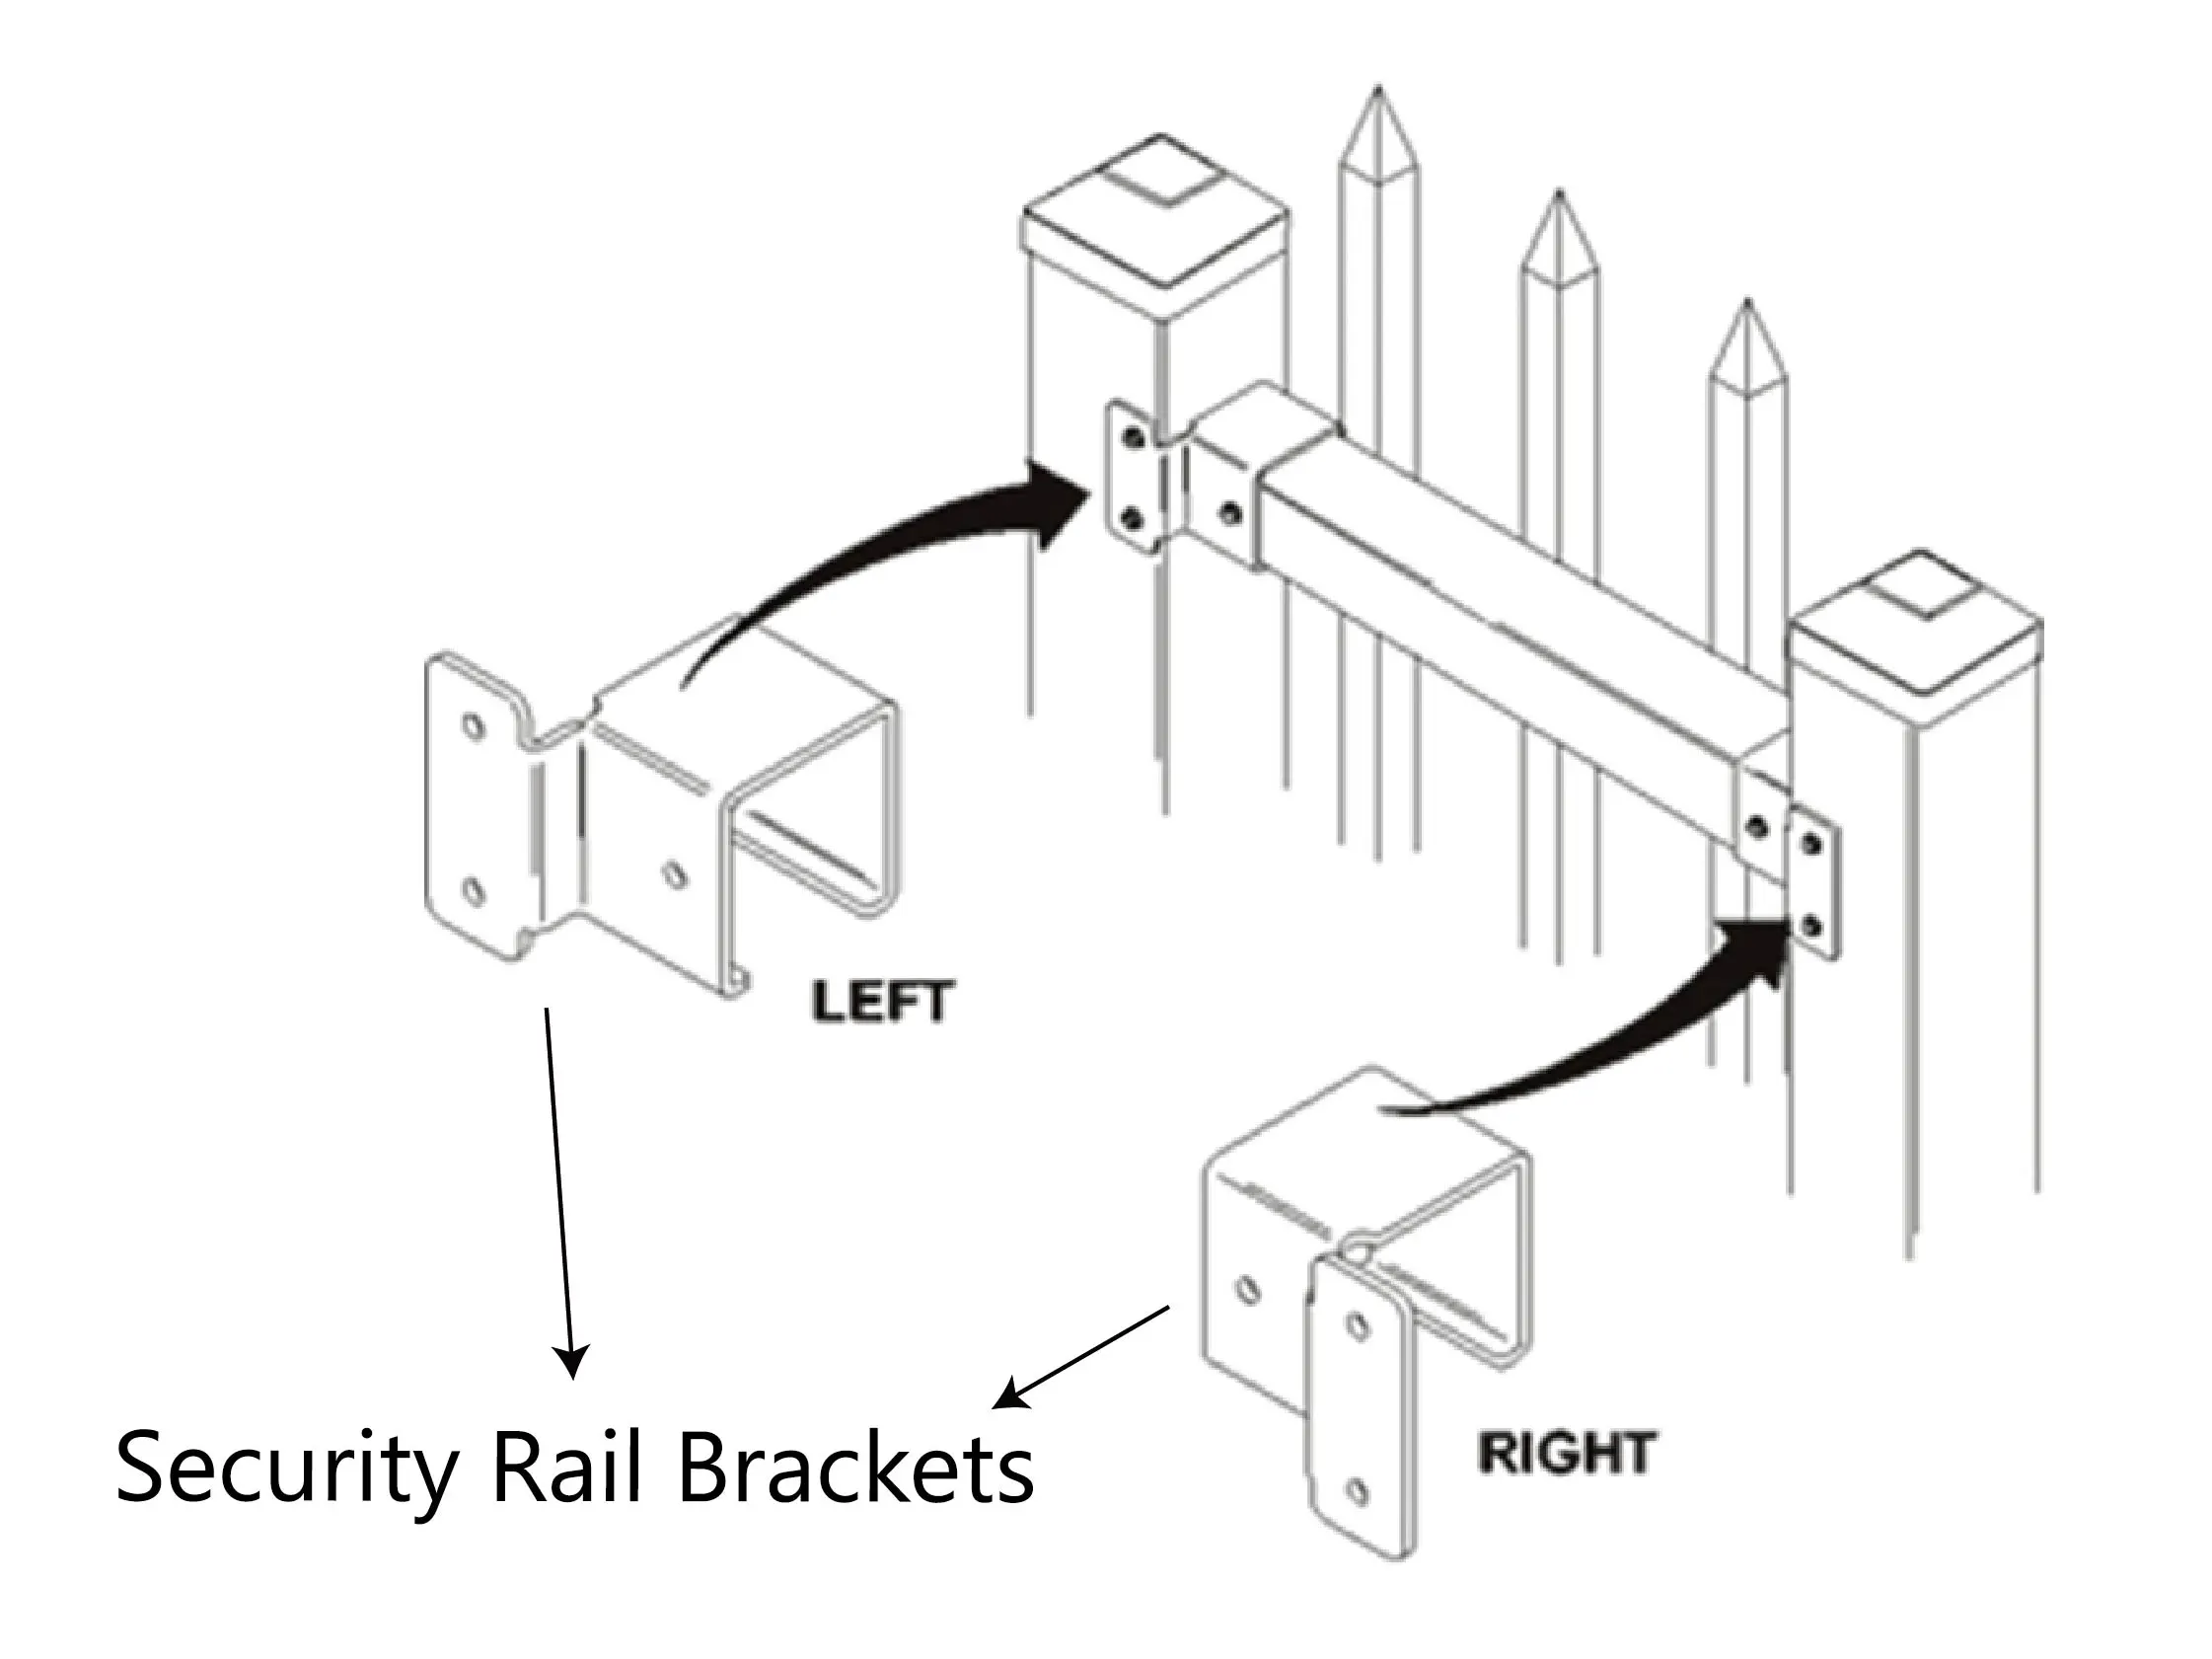 Security Rail Brackets Usage Scenarios